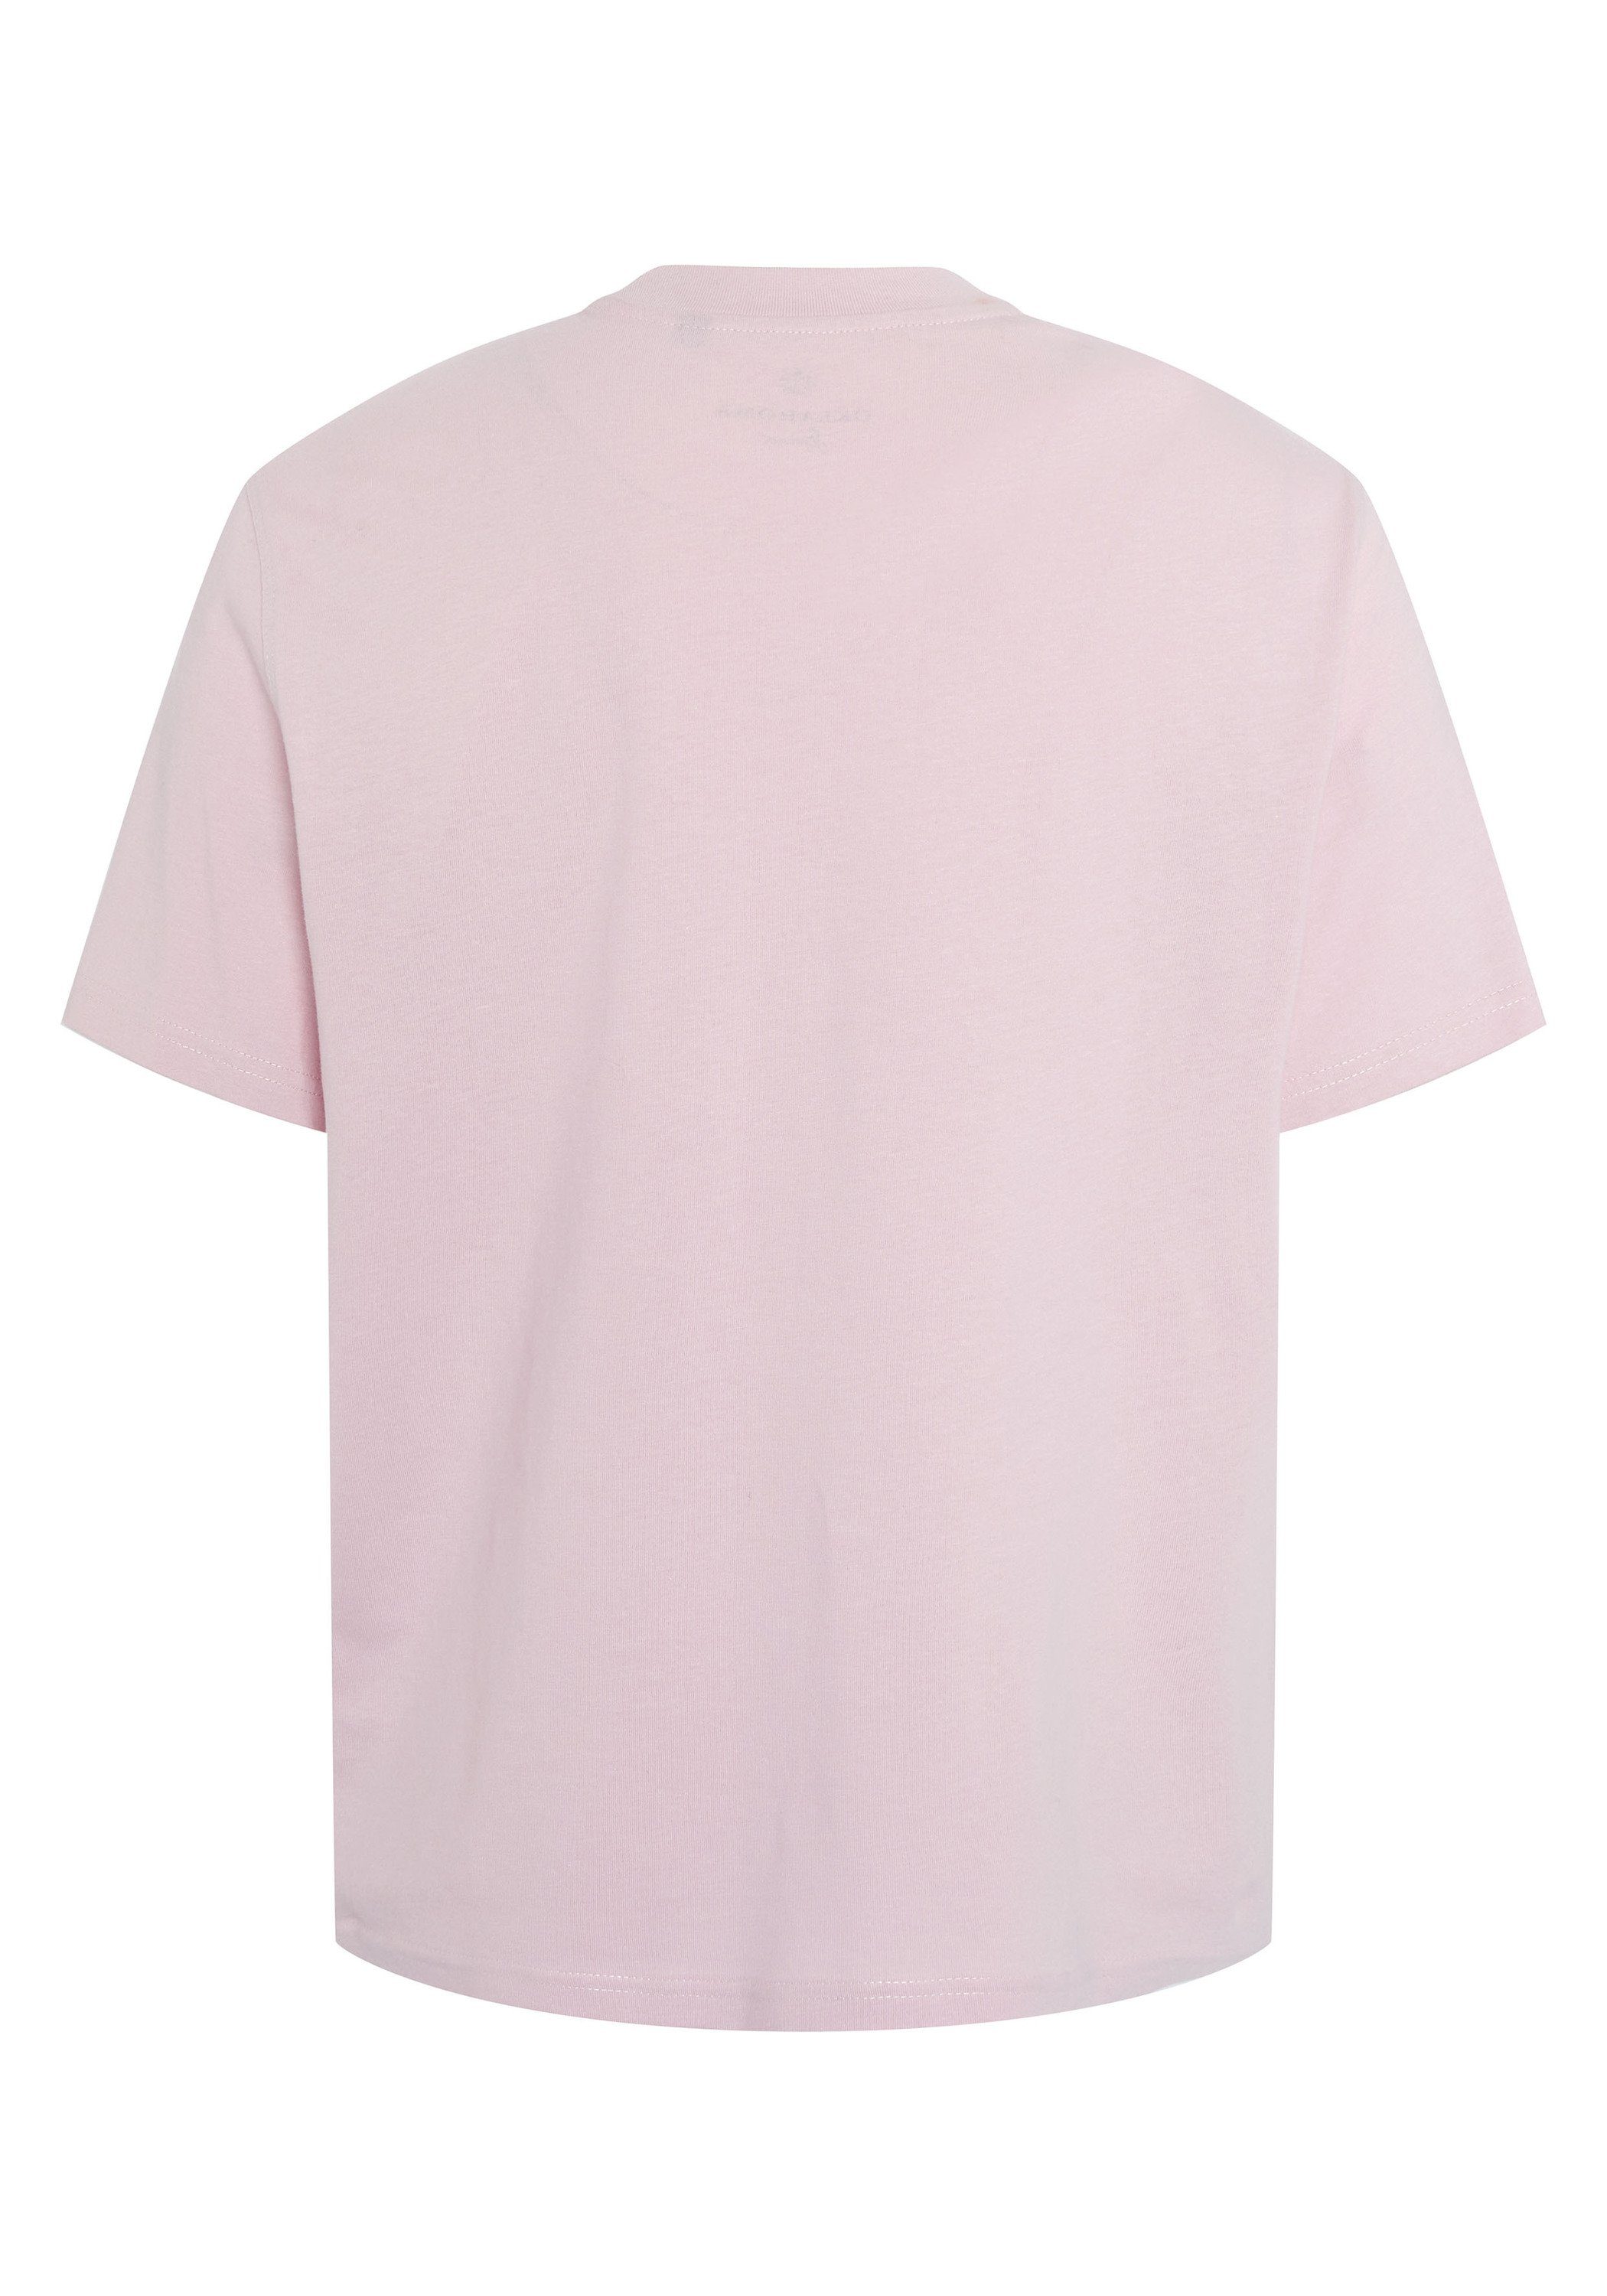 Print-Shirt Jeans Desert-Motiv Oklahoma Nectar mit 14-2305 Pink